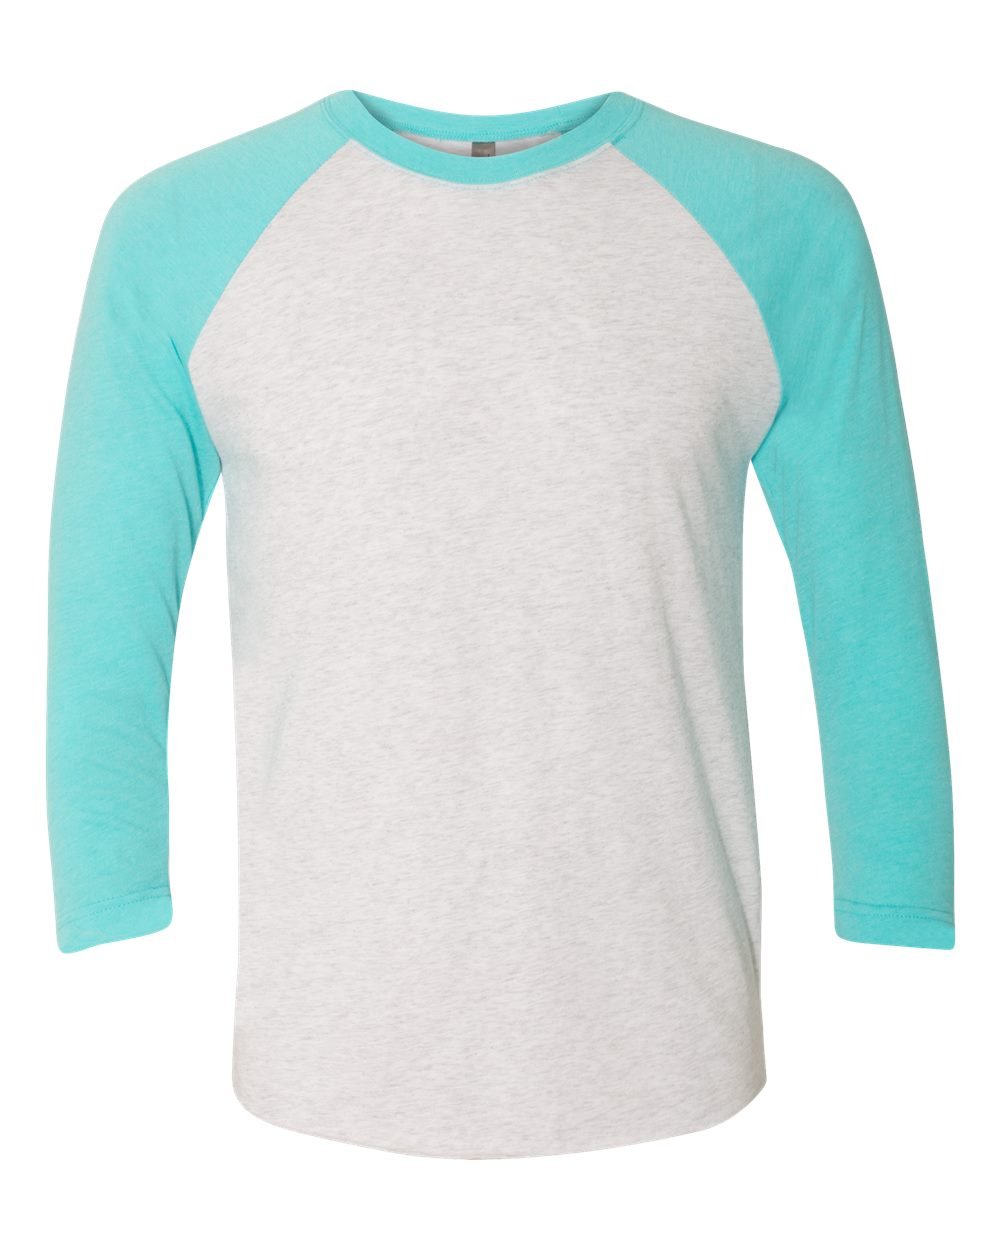 Unisex Tri-Blend 3/4-Sleeve Raglan T-Shirt - DSP On Demand